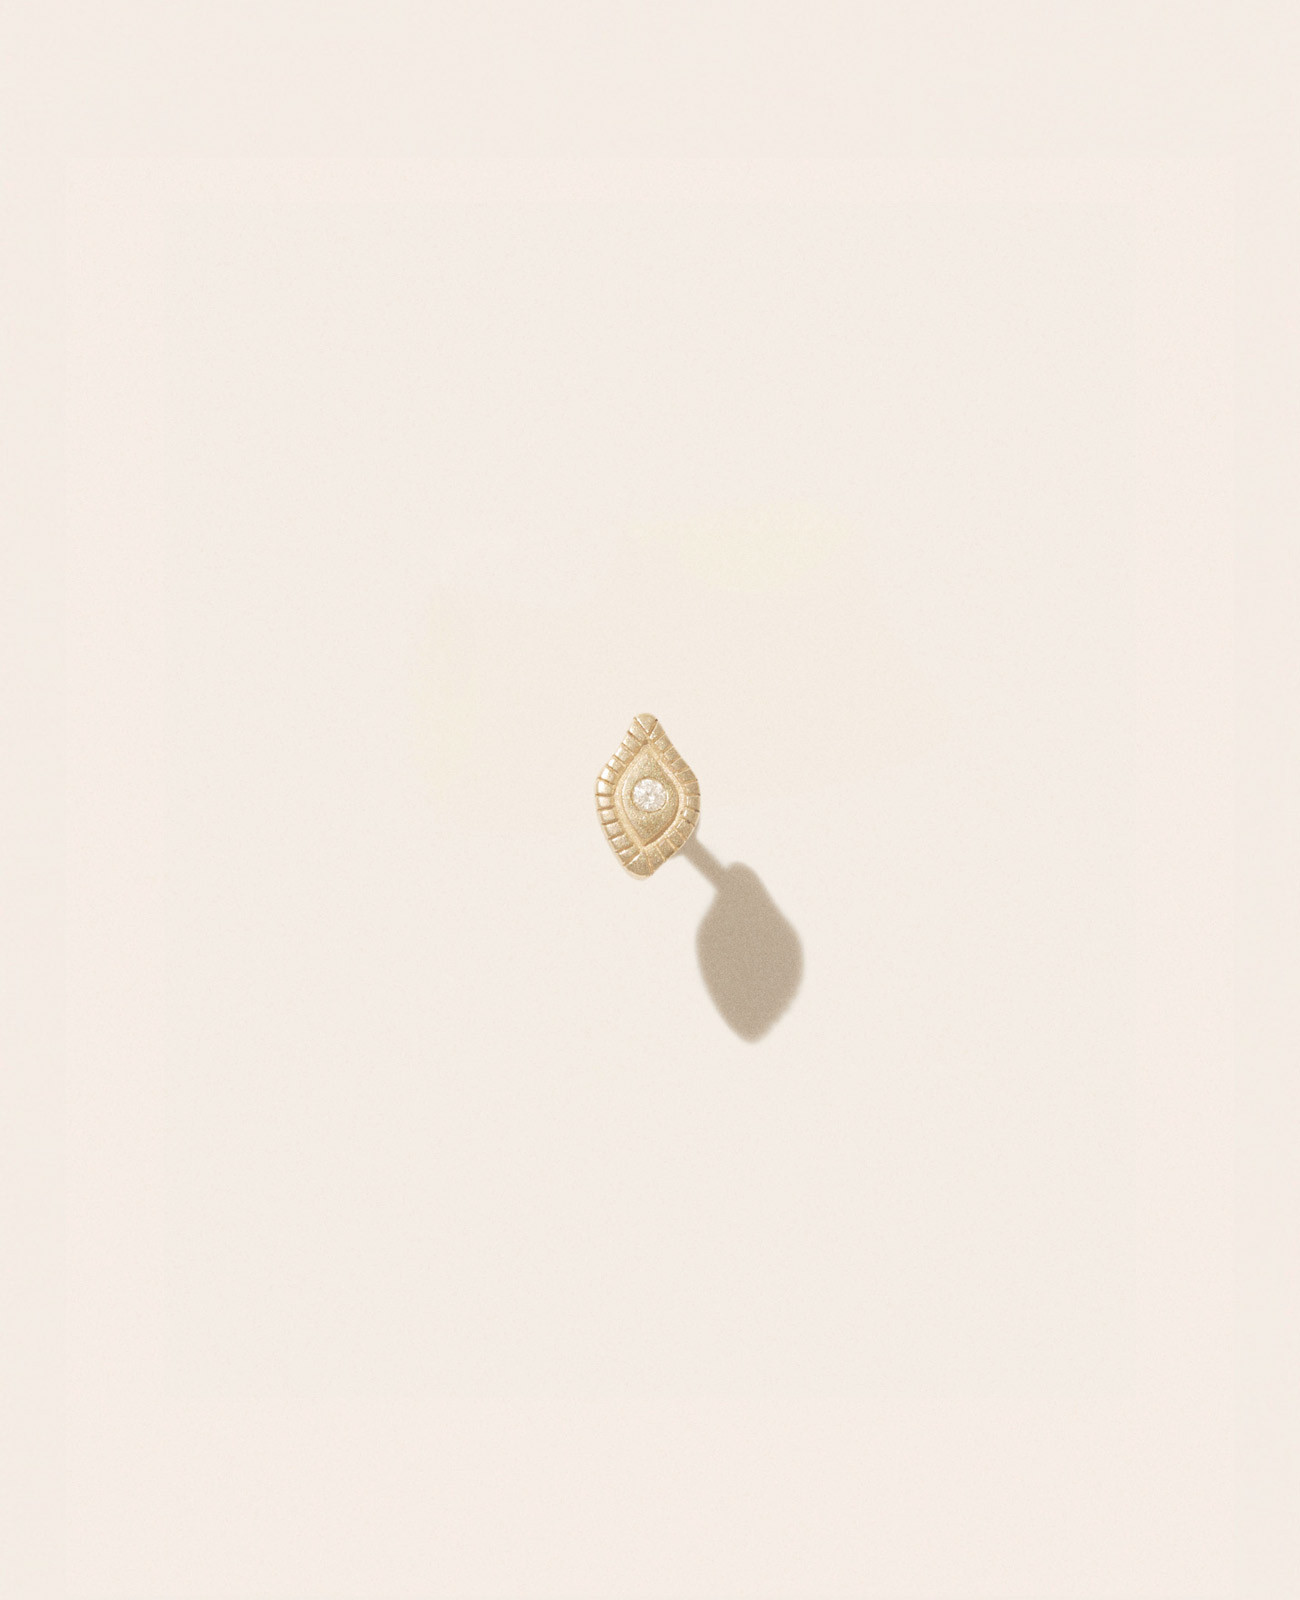 SOUAD N°3 earring pascale monvoisin jewelry paris